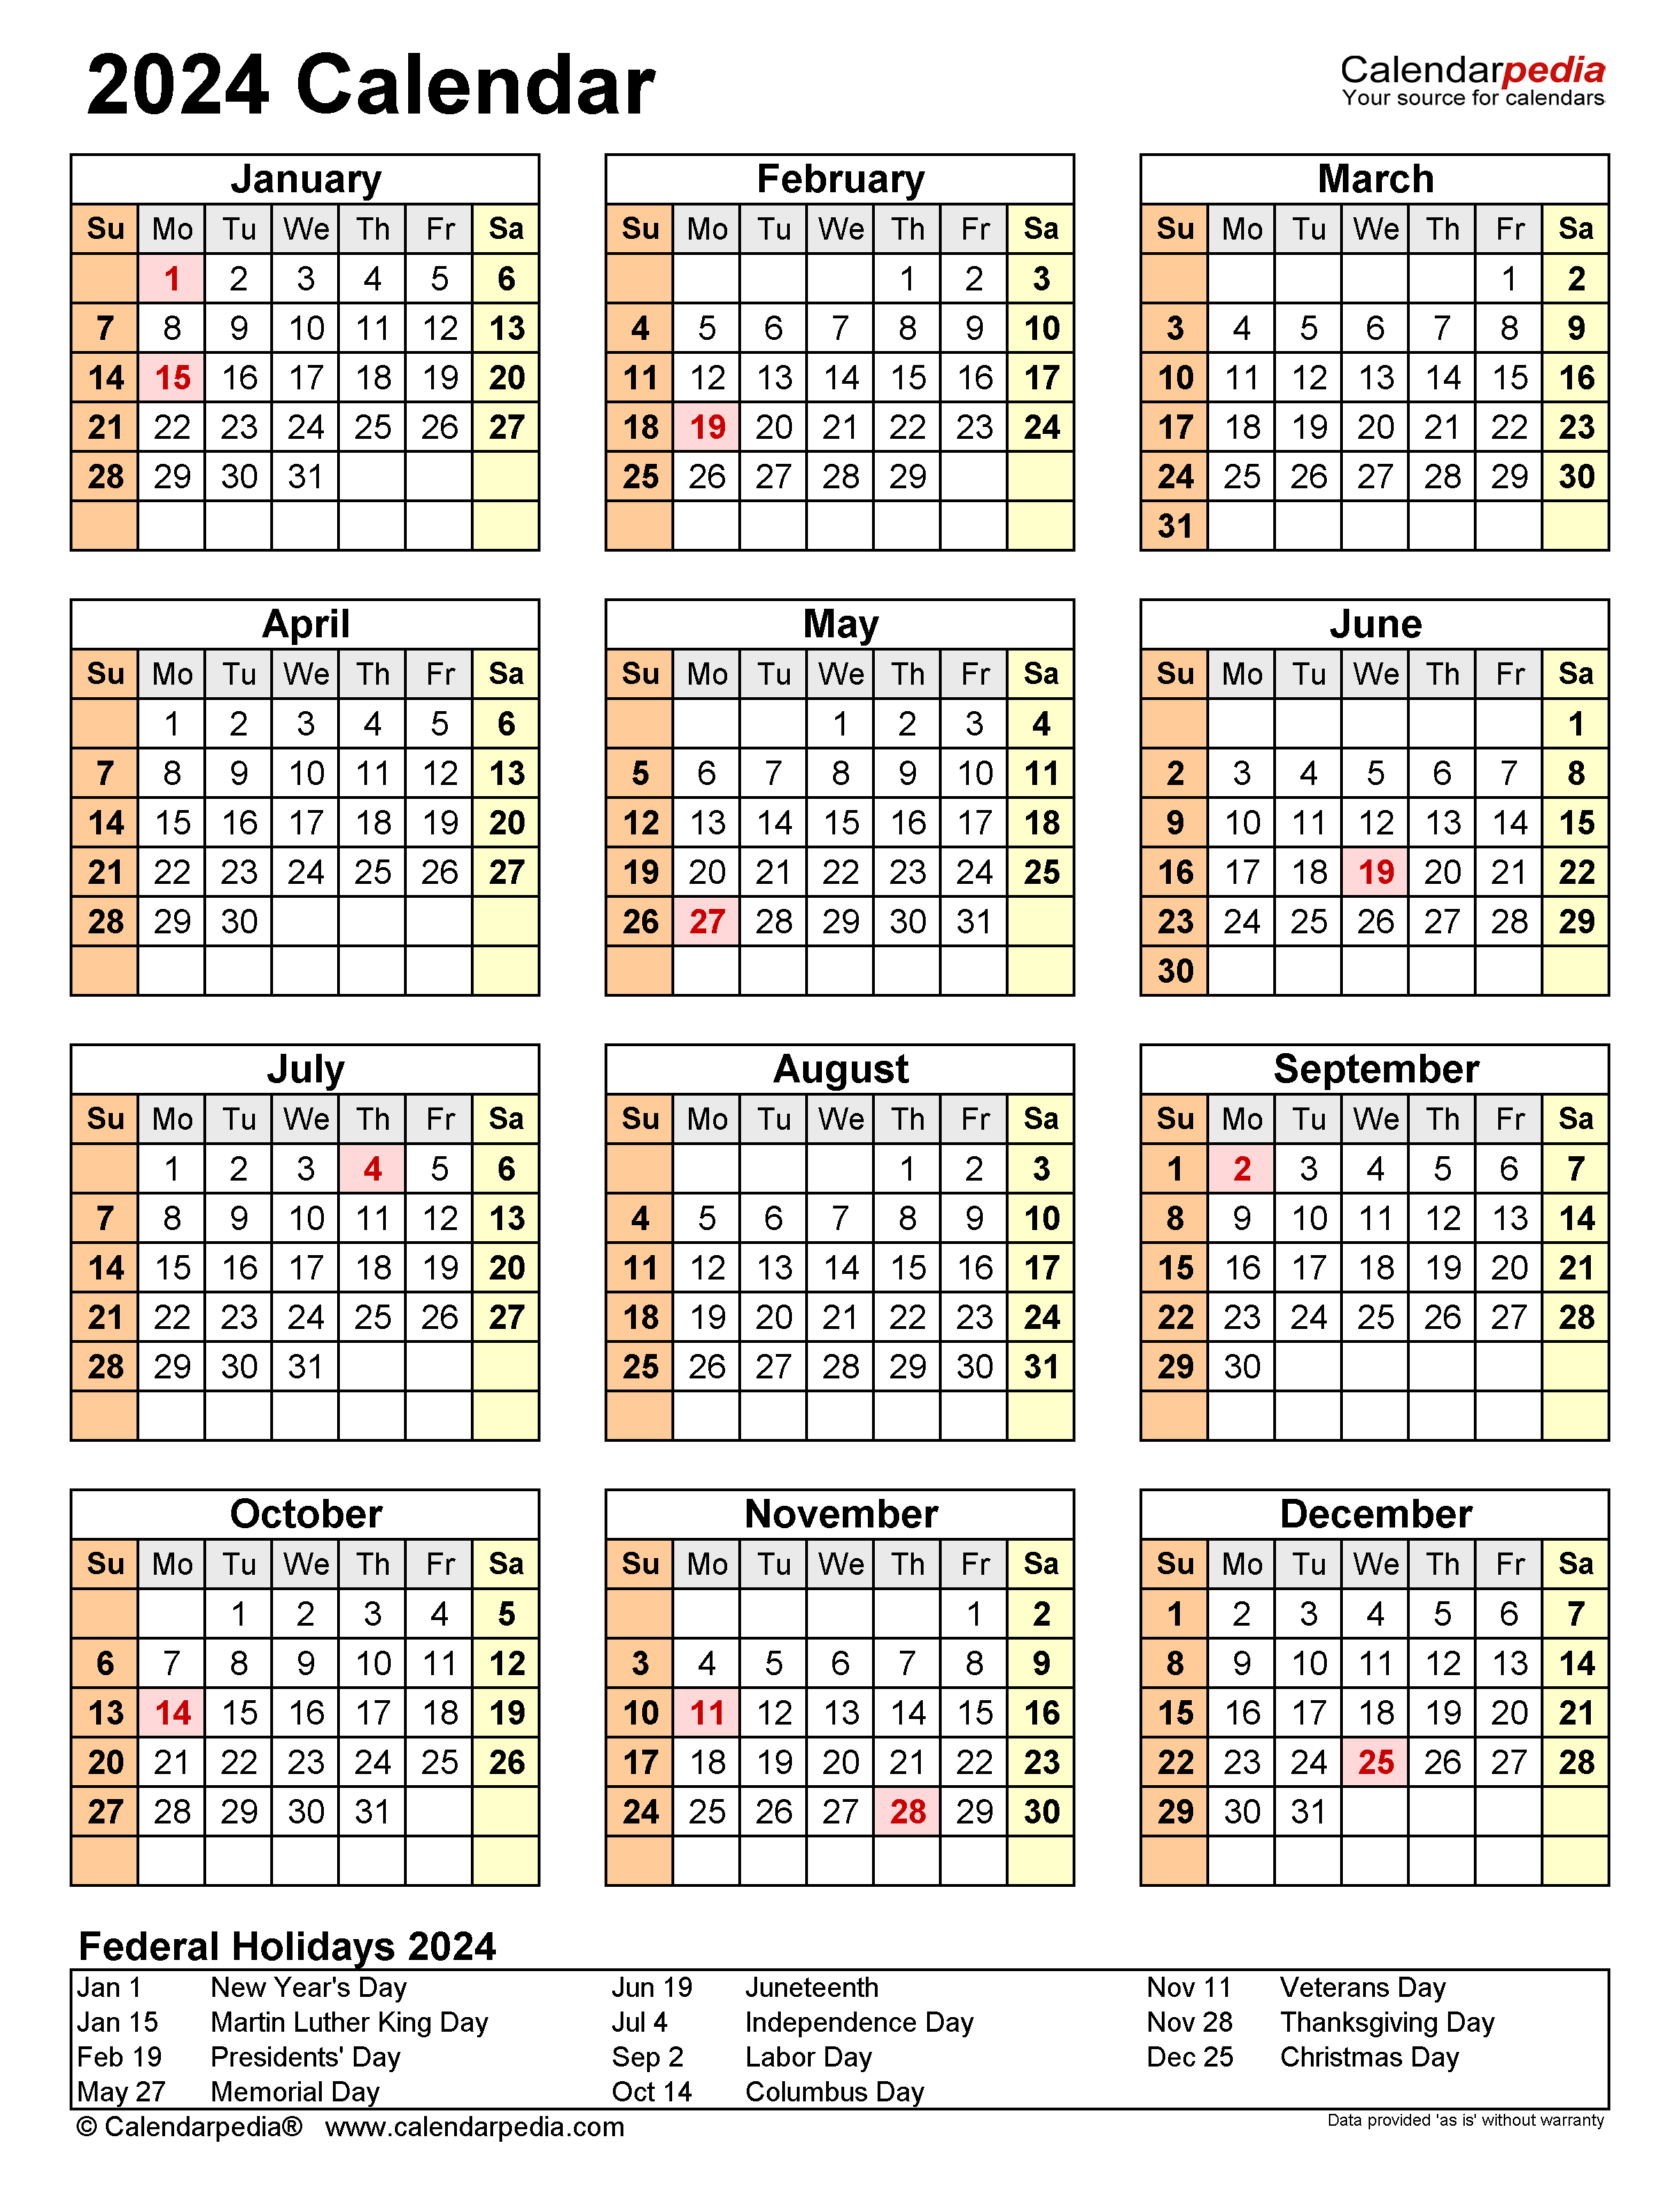 Free Printable 2024 Calendar With Holidays Crownflourmills - Free Printable 2024 Calendar With Holidays UK